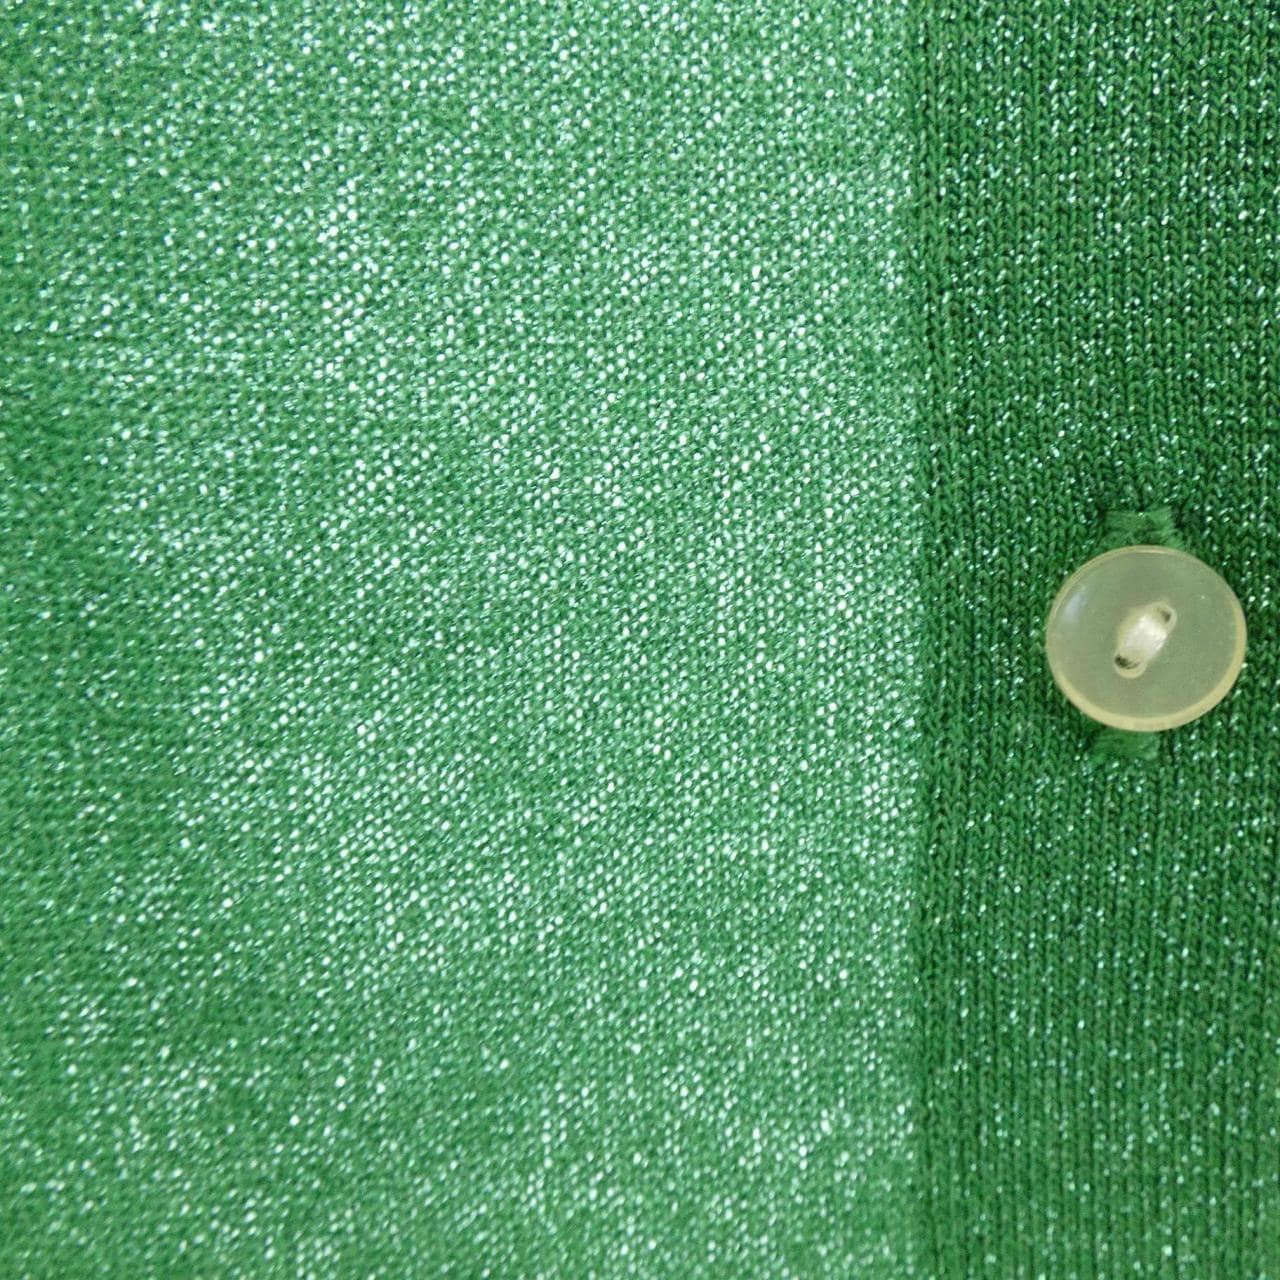 green label relaxing cardigan